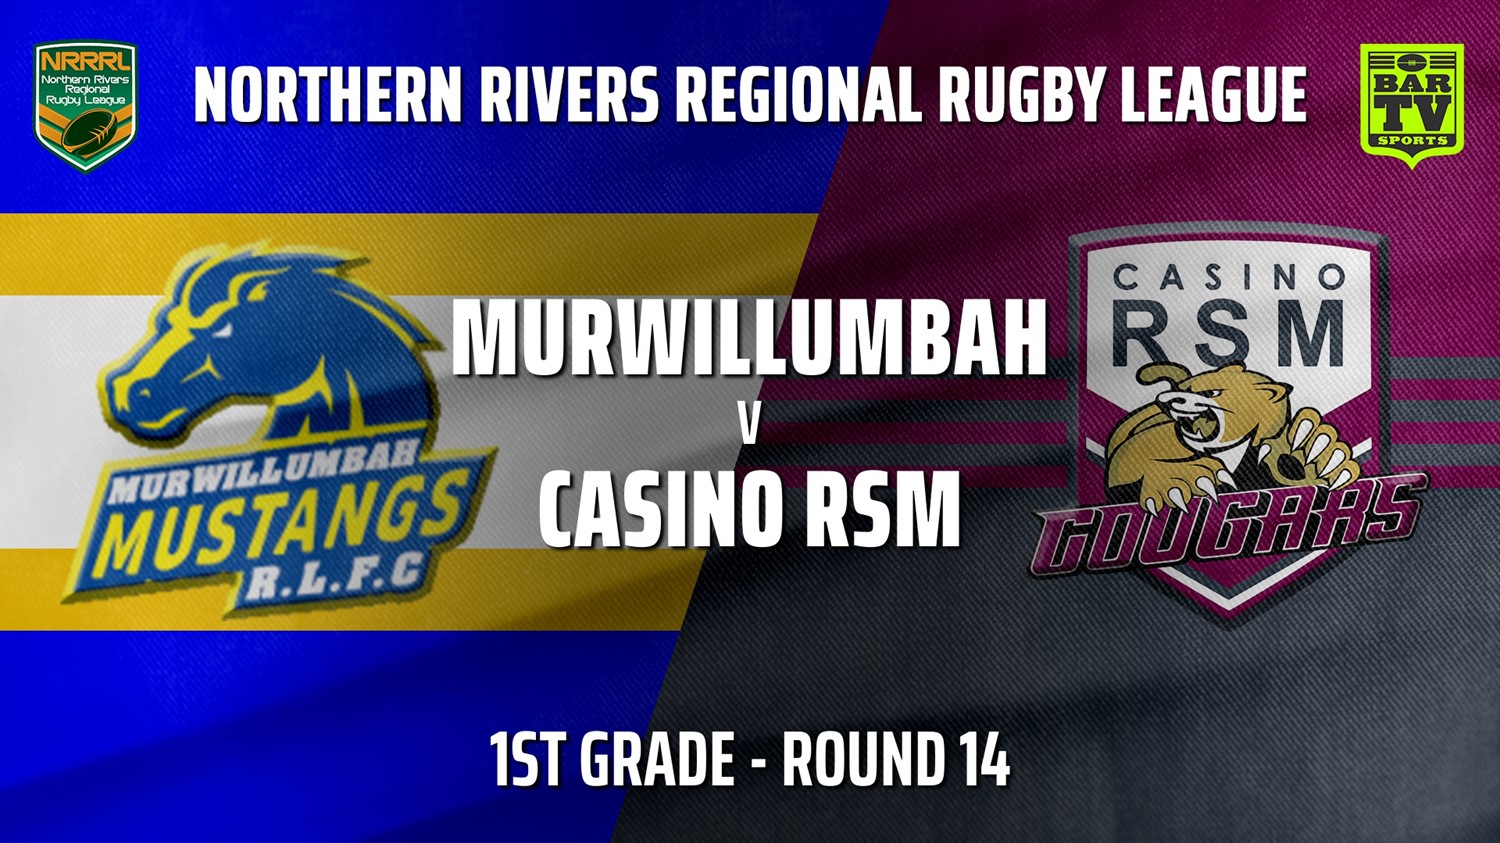 210808-Northern Rivers Round 14 - 1st Grade - Murwillumbah Mustangs v Casino RSM Cougars Slate Image